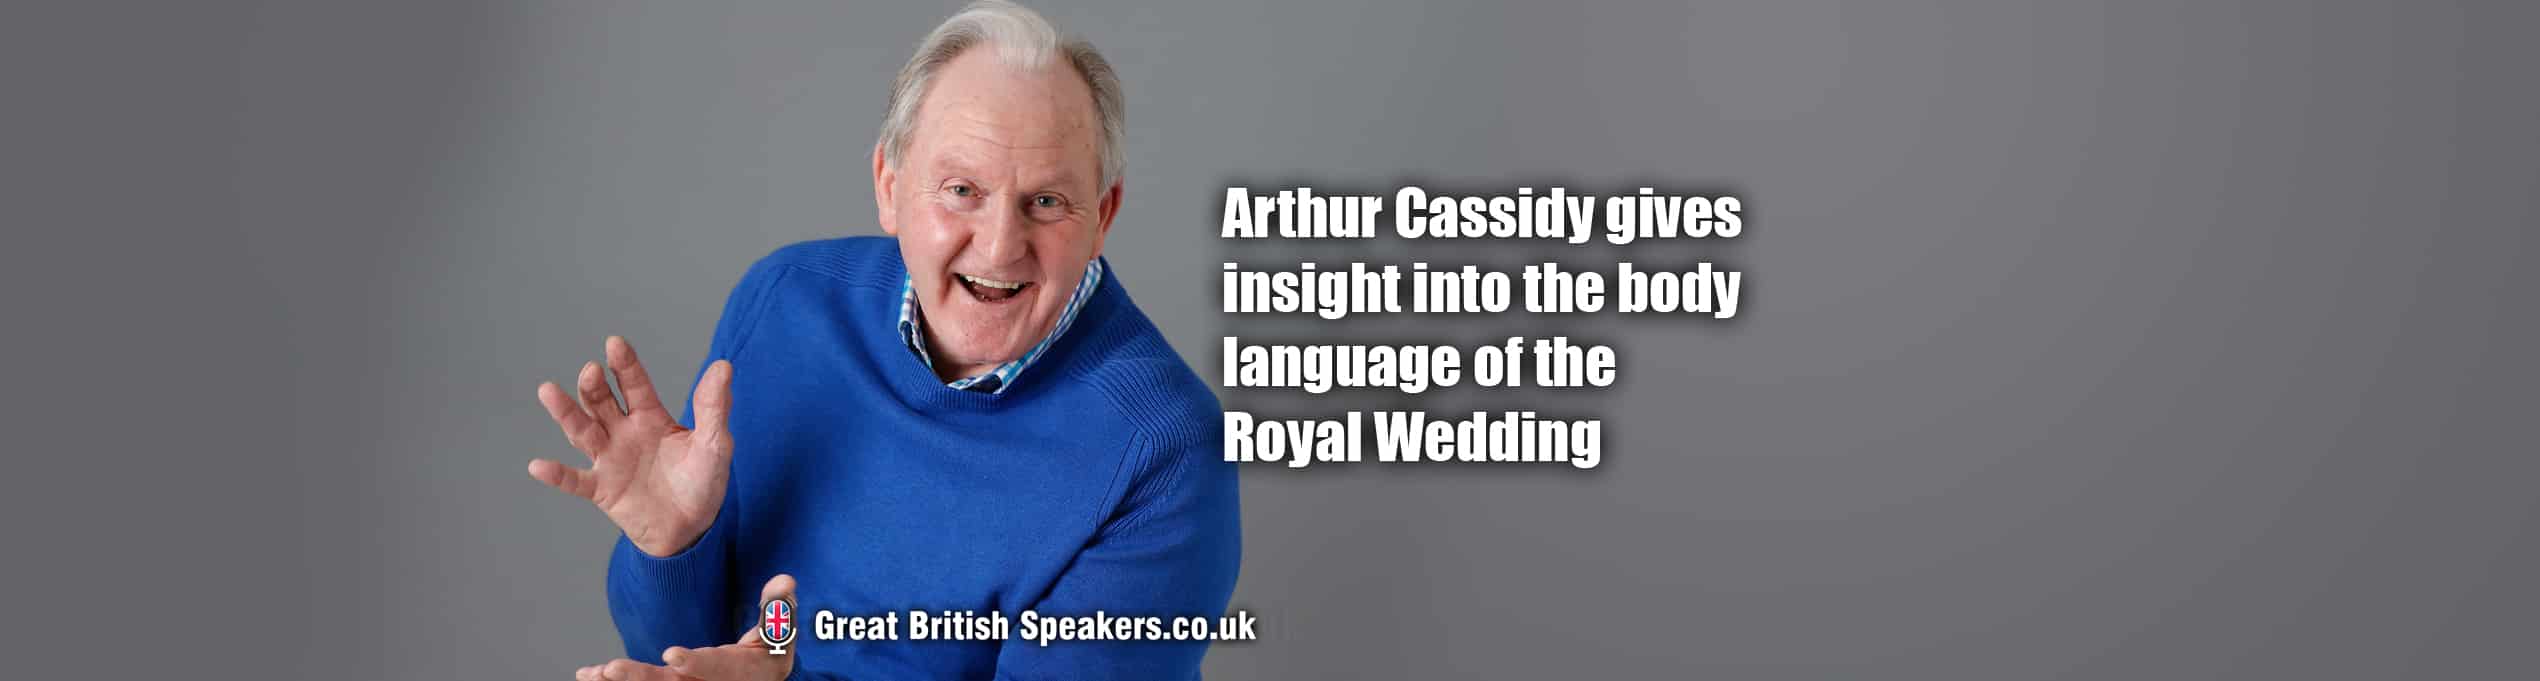 Arthur Cassidy celebrity body language expert Speaker at Great British Speakers